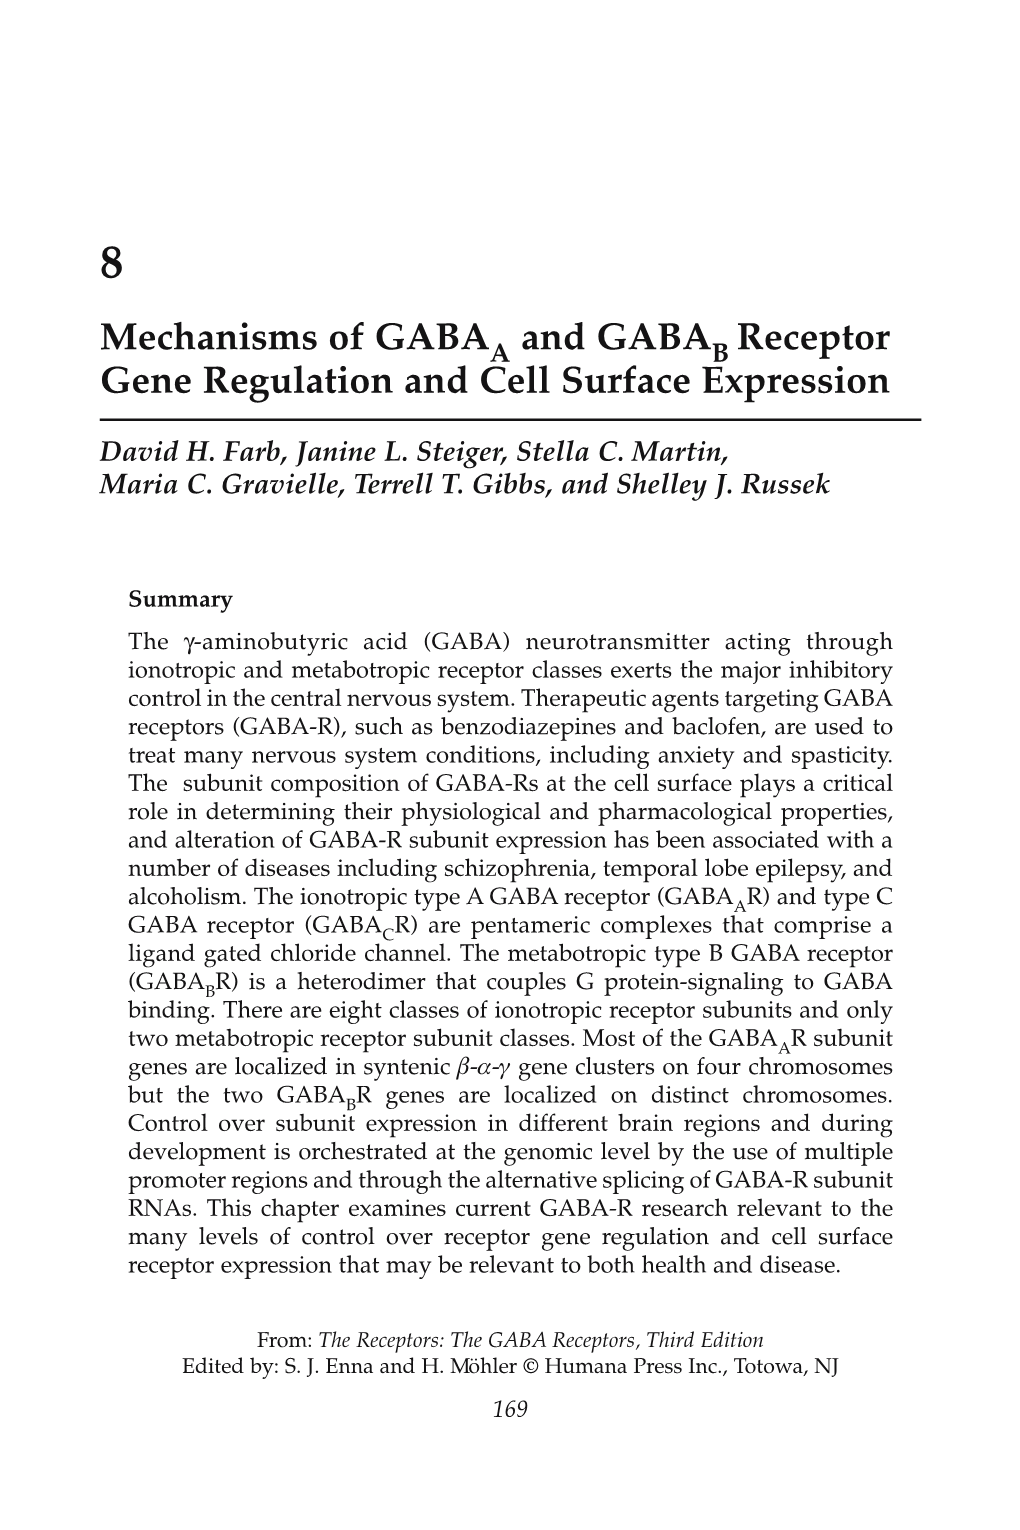 Mechanisms of GABA and GABA Receptor Gene Regulation and Cell